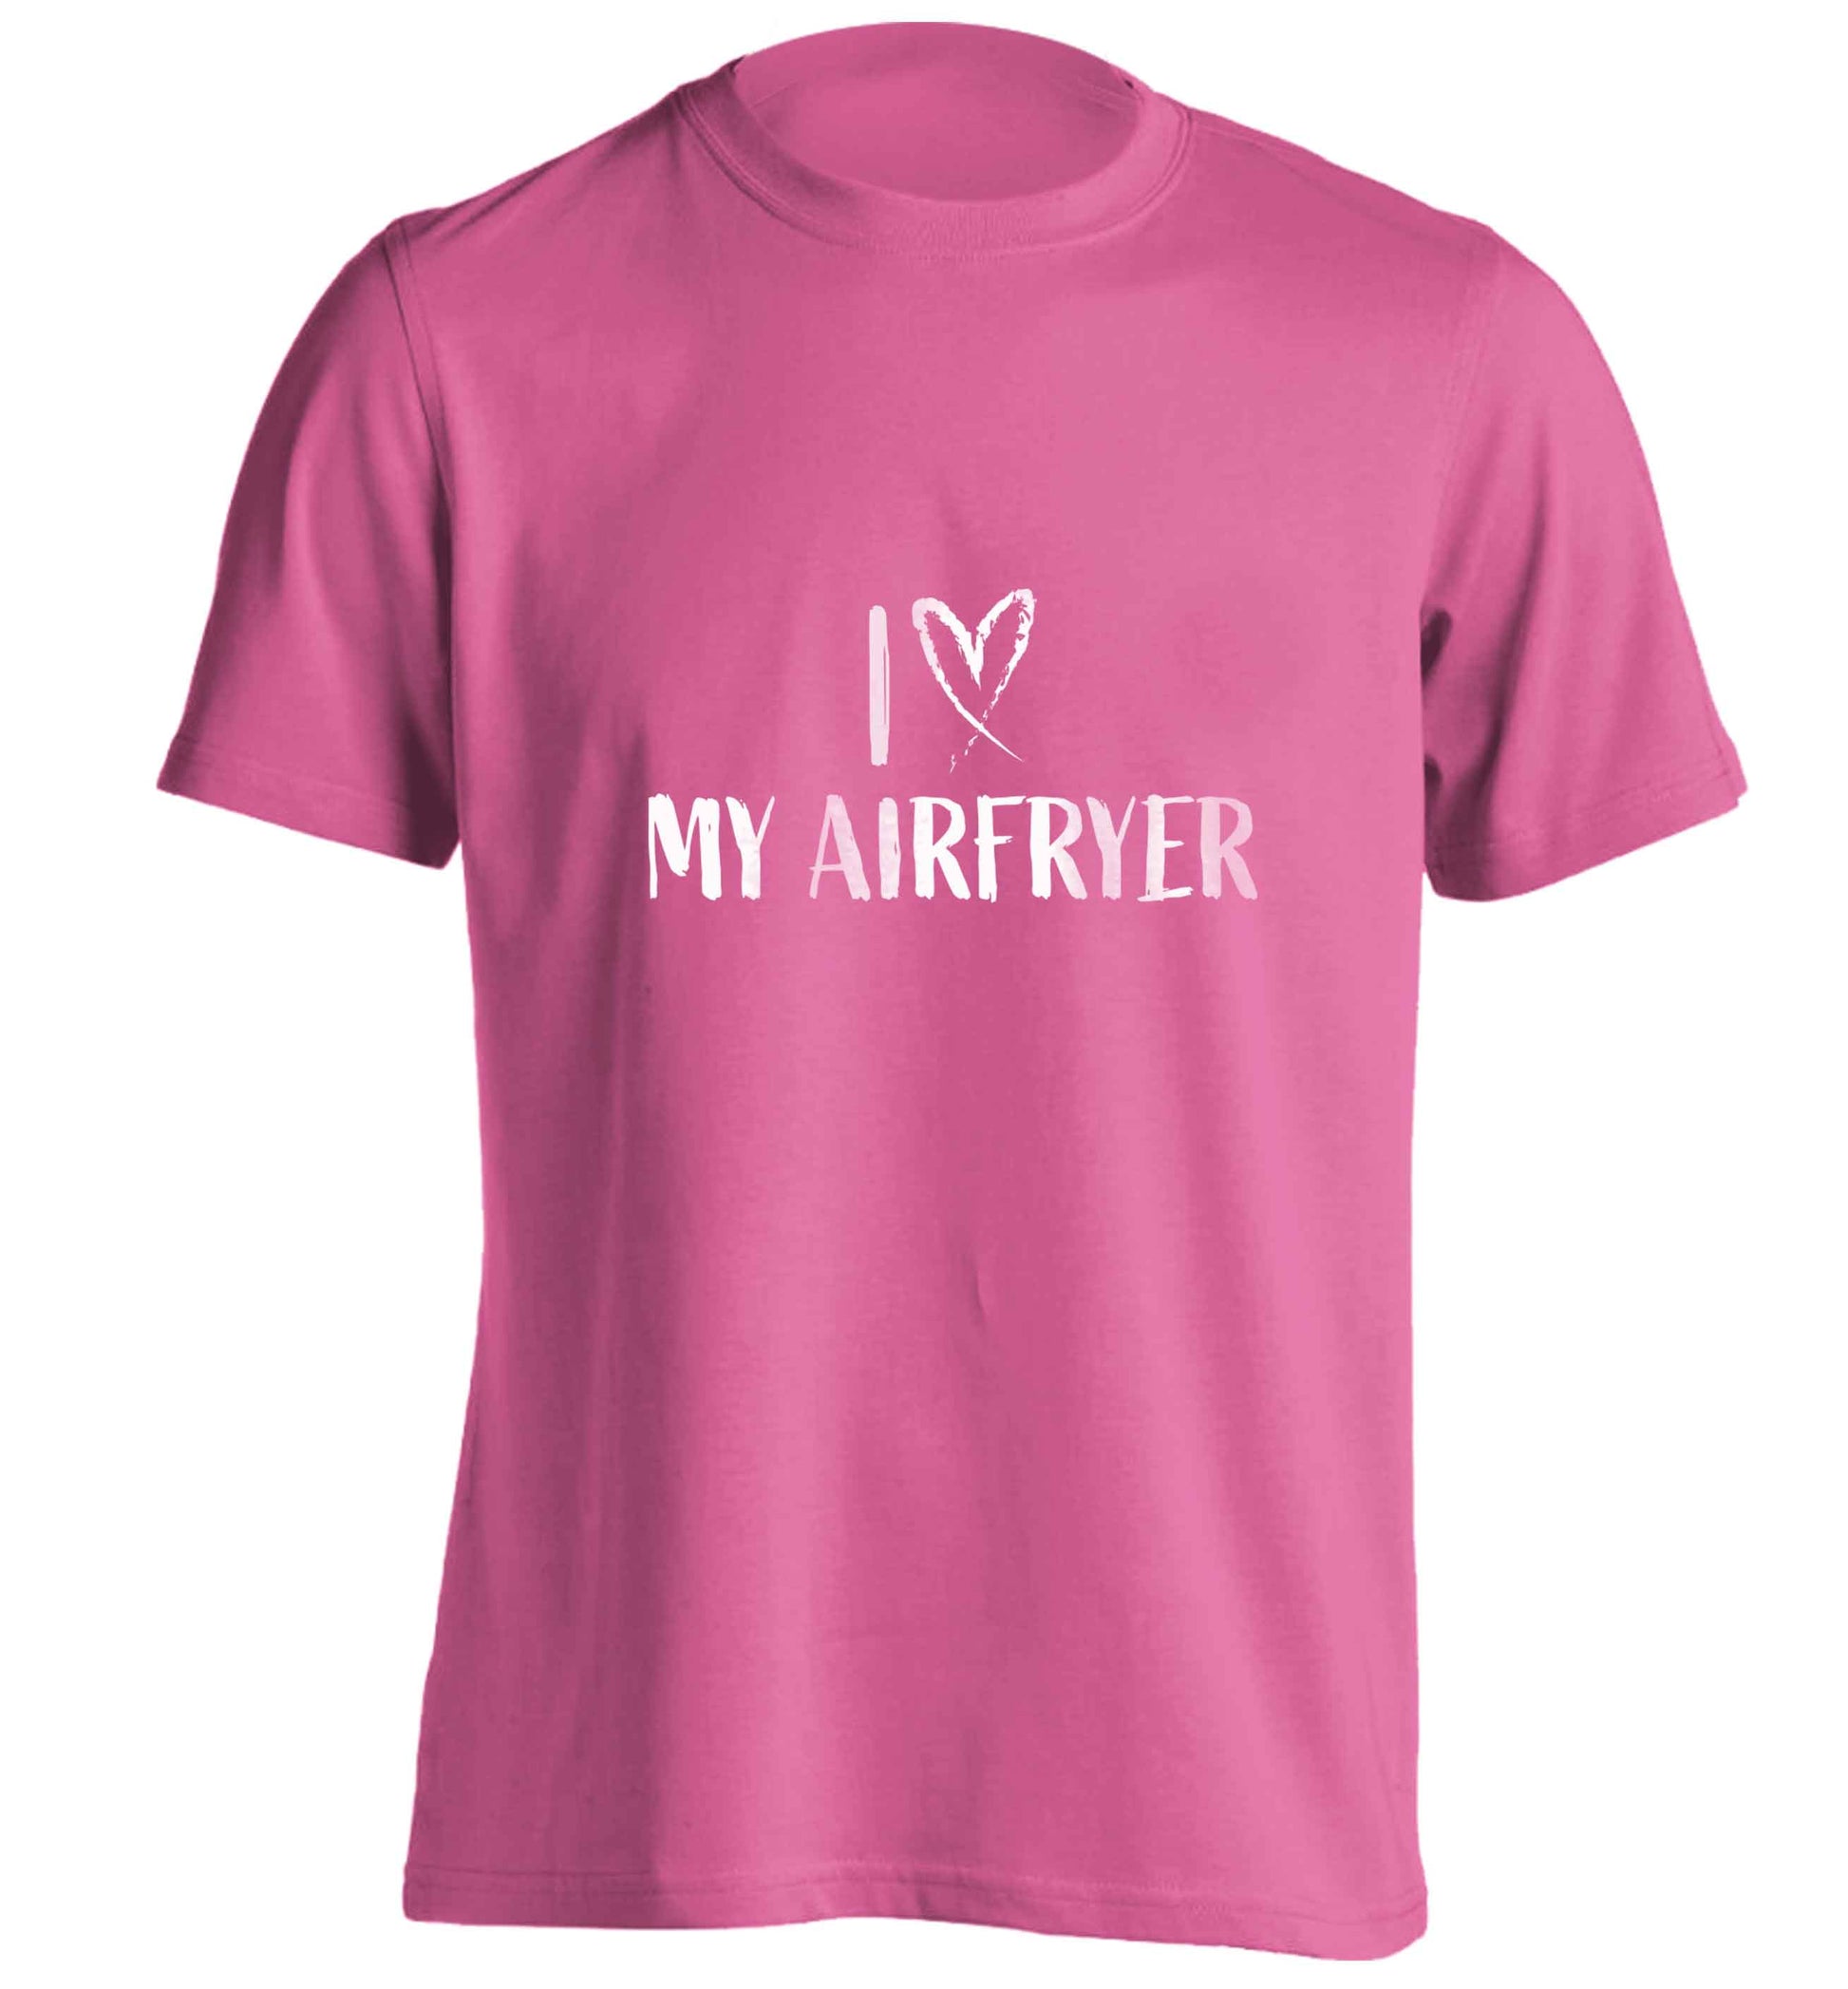 I love my airfryeradults unisex pink Tshirt 2XL